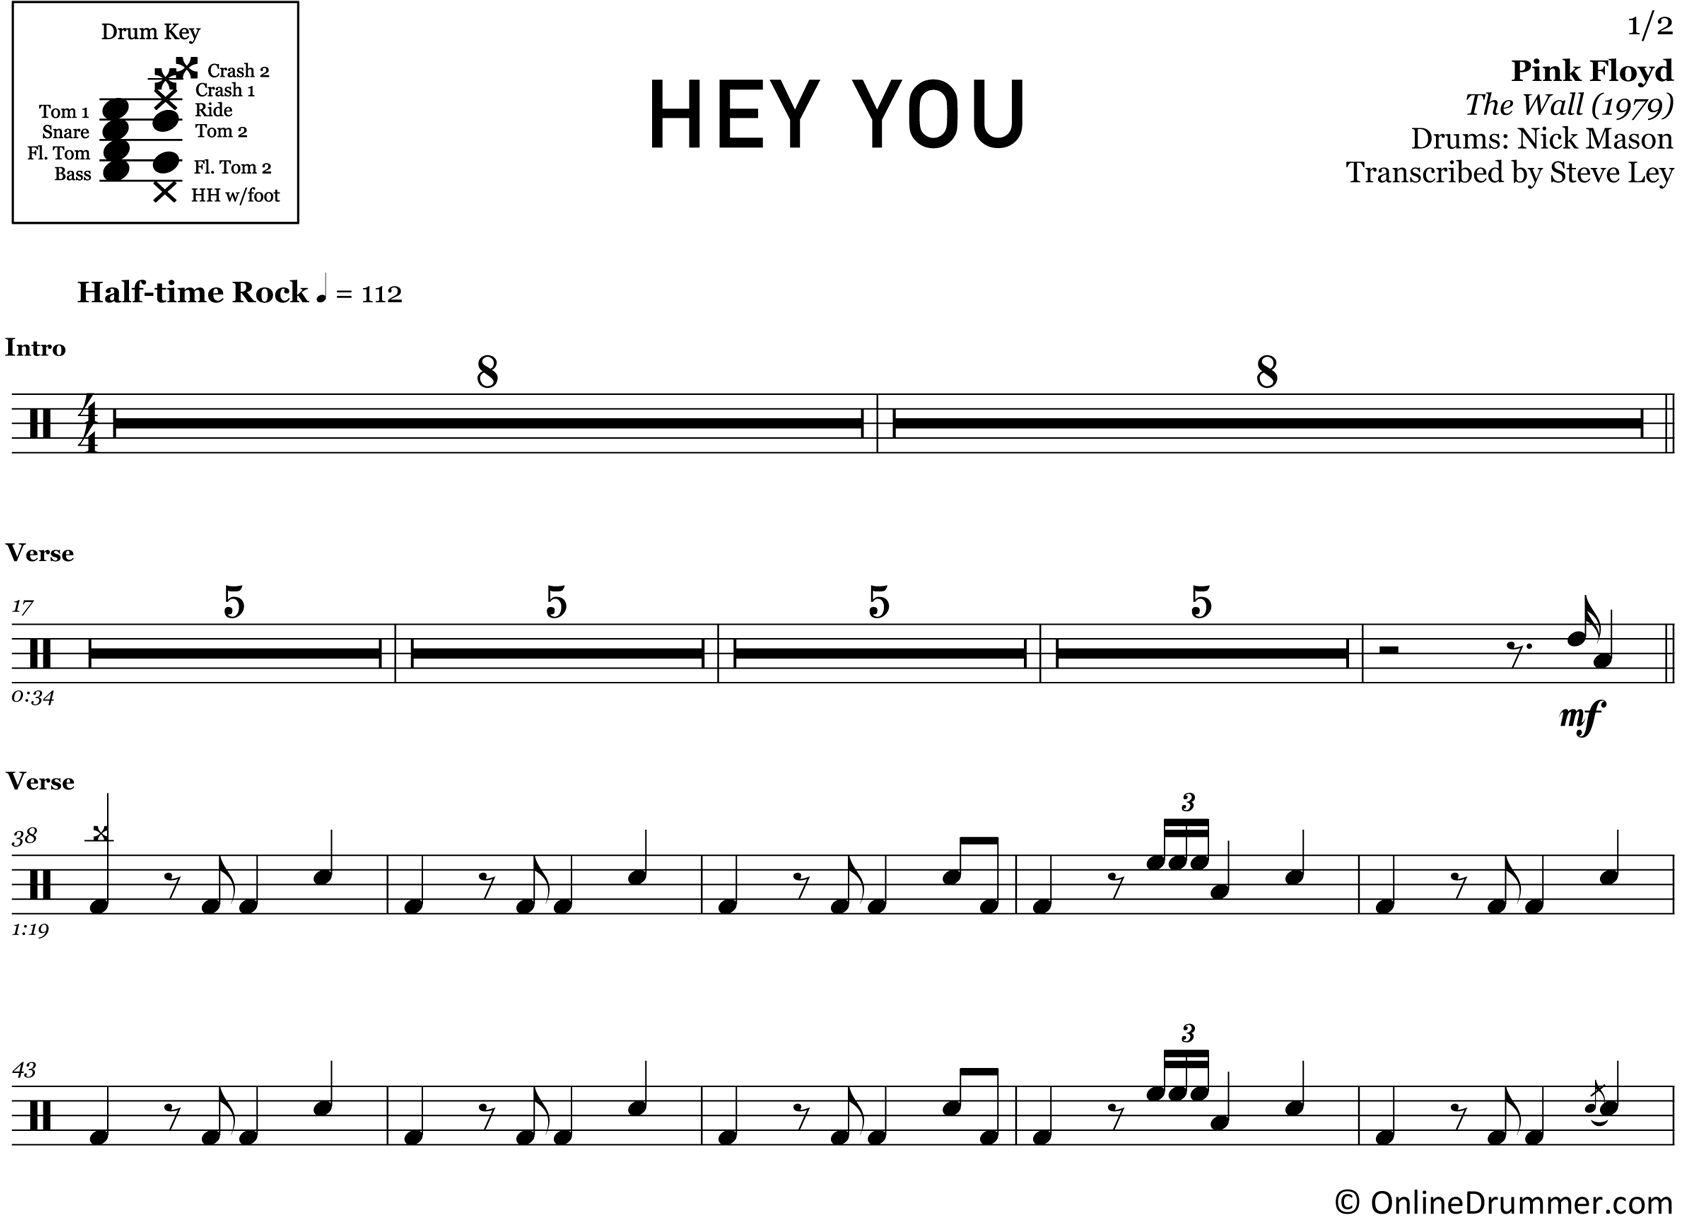 Hey You - Pink Floyd - Drum Sheet Music